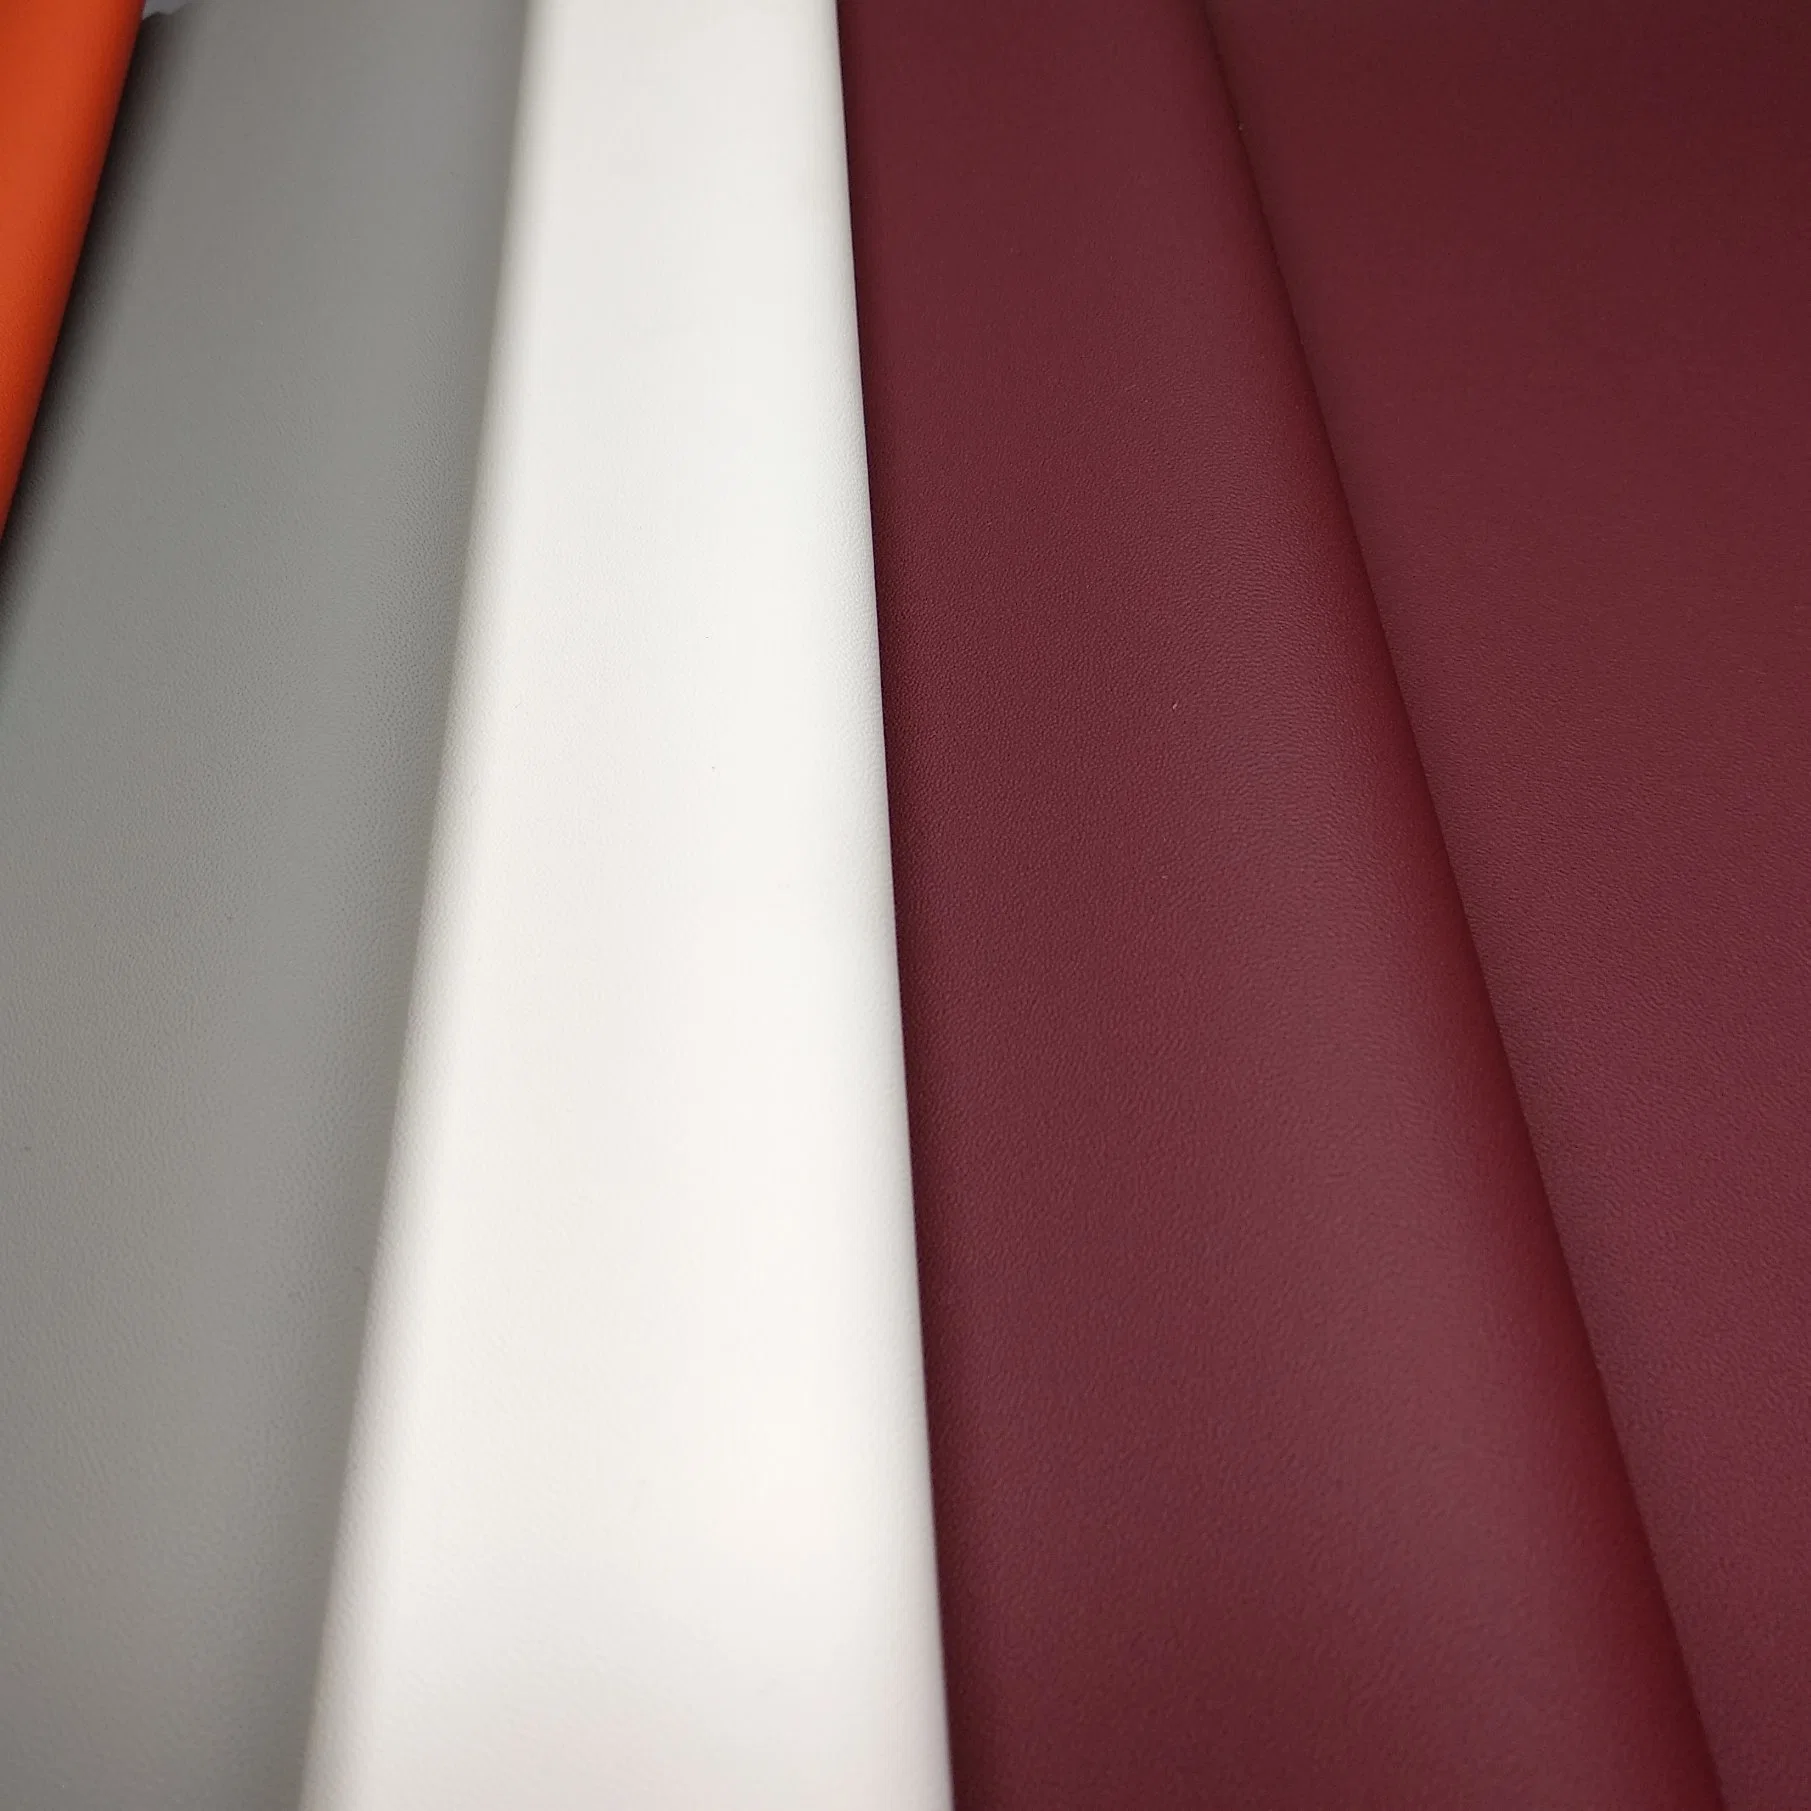 Nappa Design PU PVC sintético cuero auto para el tapizado de coches/zapatos /Bolsa /tela /Libro diario